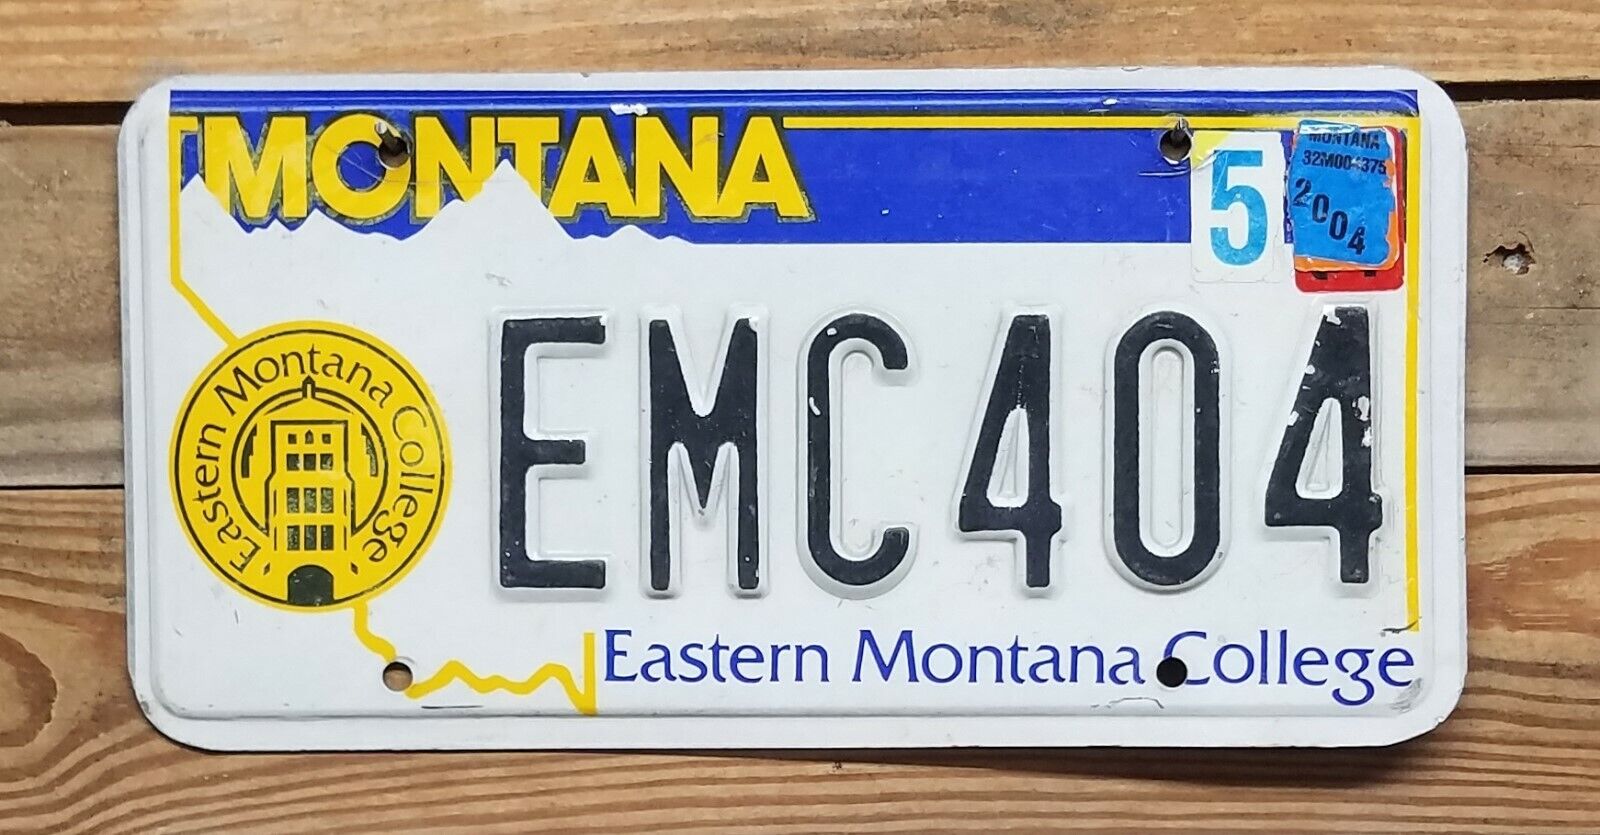 Montana expired 2004 Eastern Montana College License Plate - EMC404 ~ Embossed